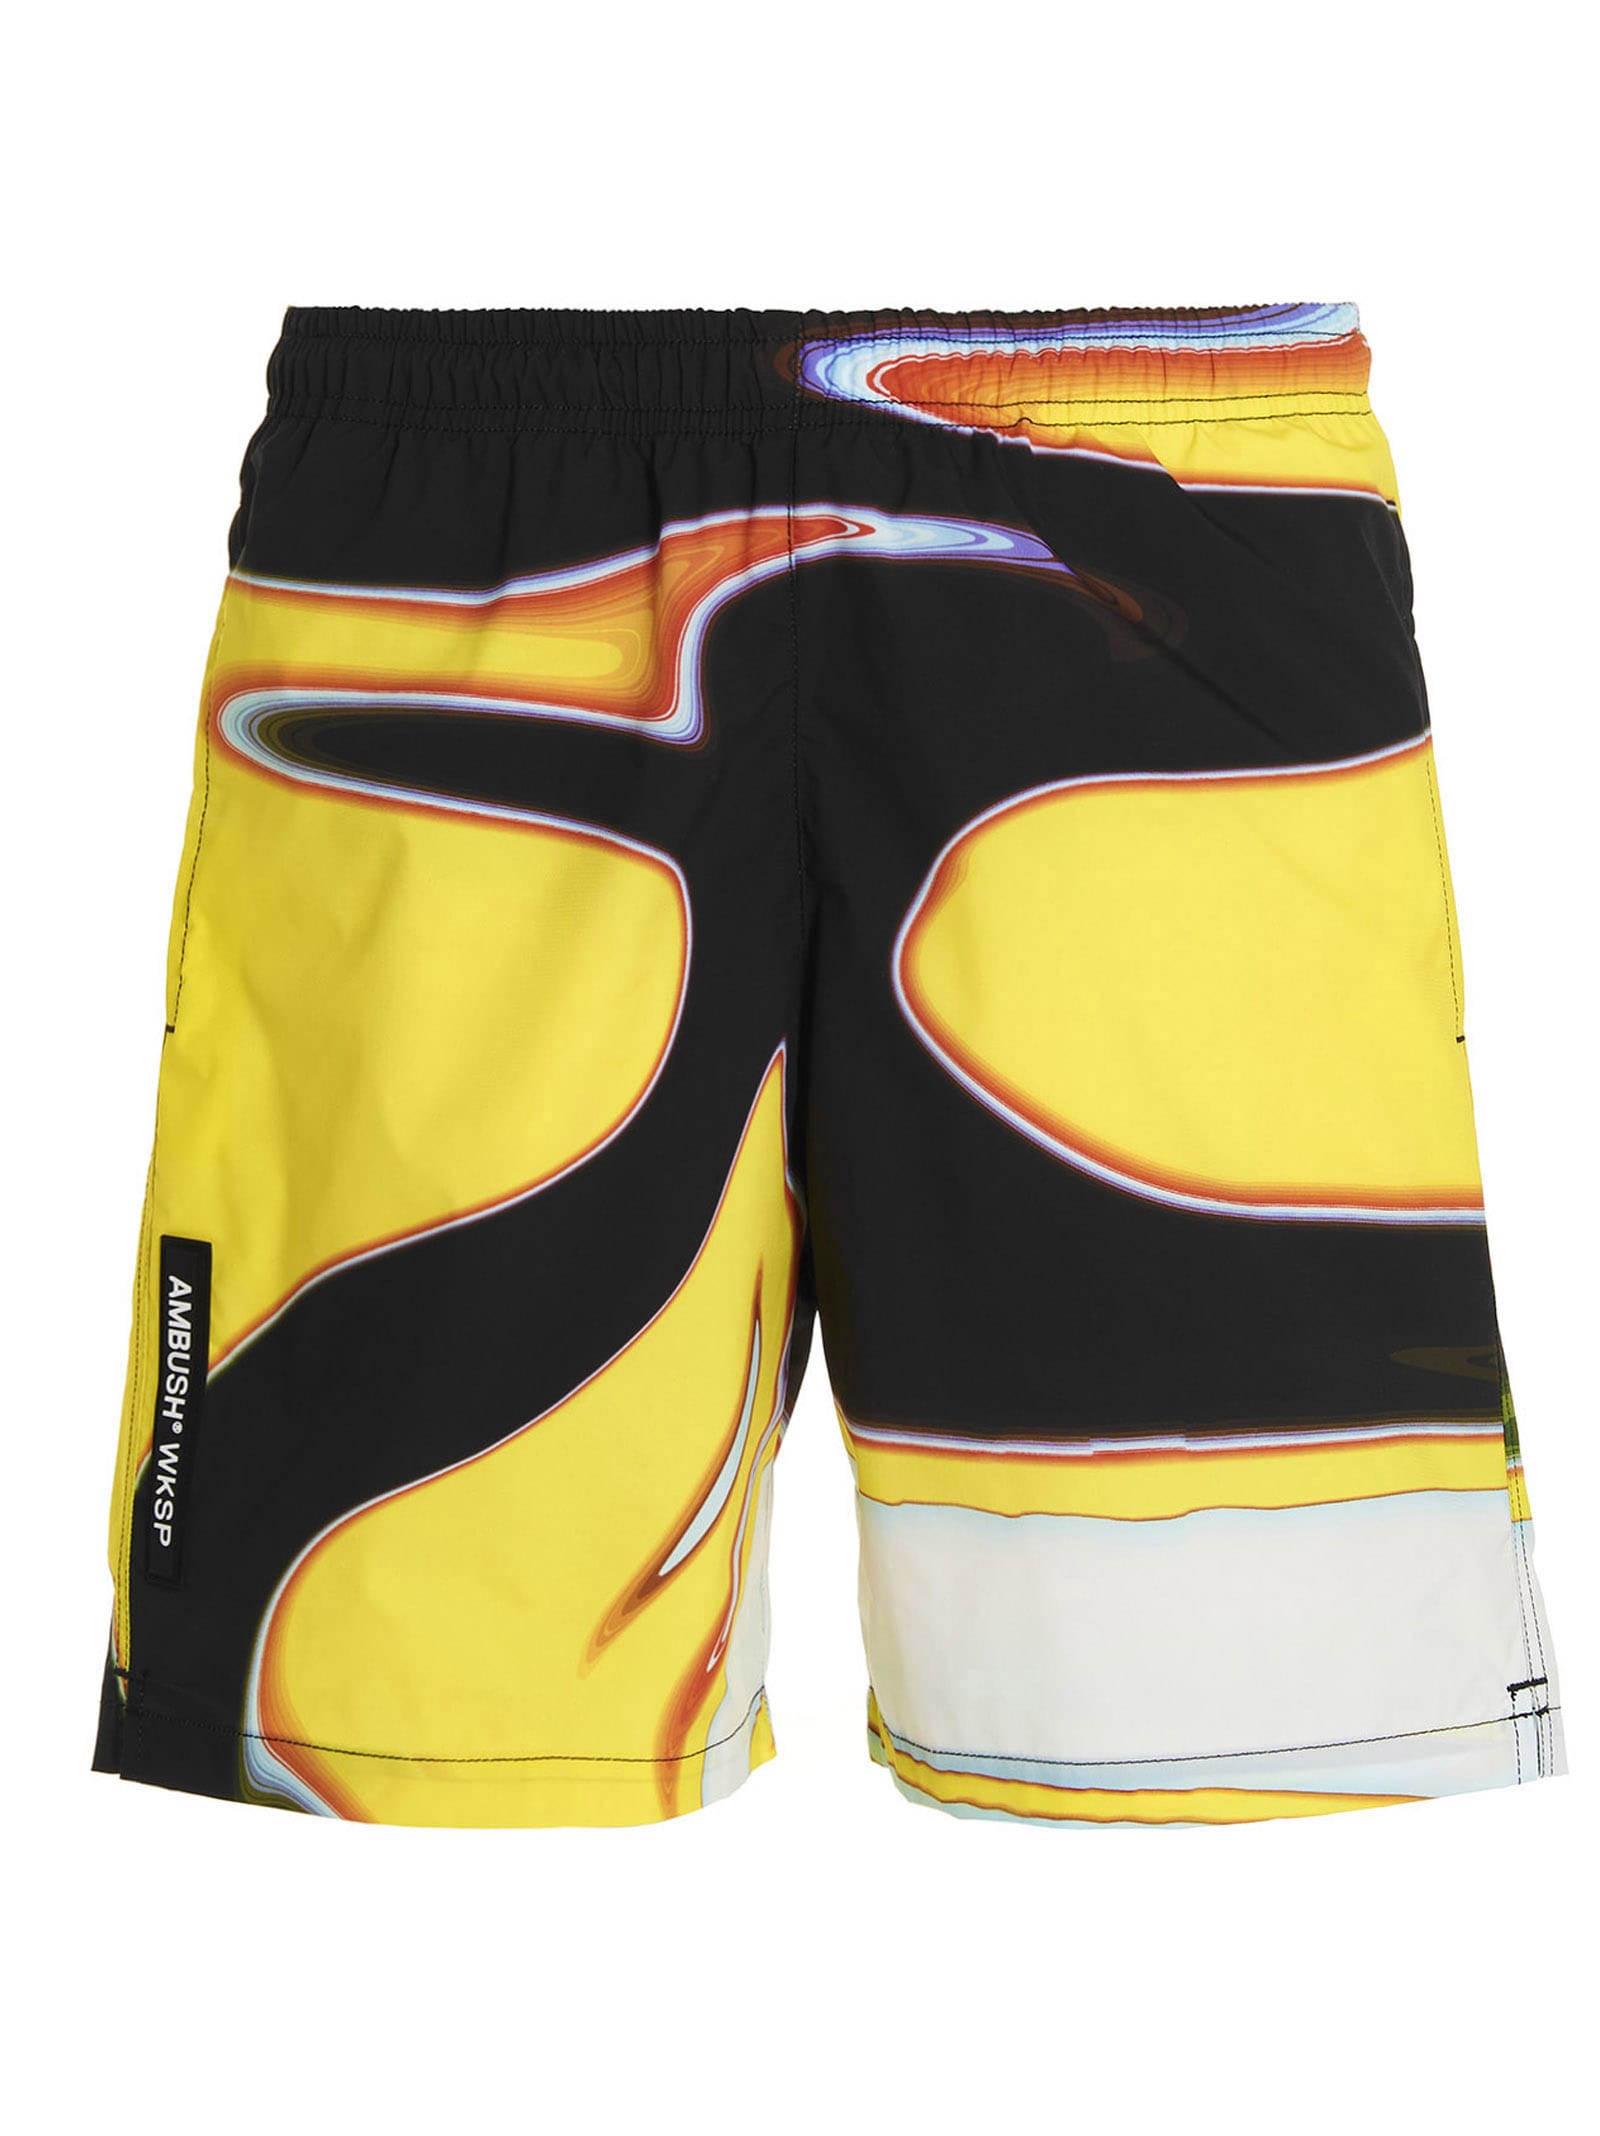 AMBUSH Printed Beach Shorts